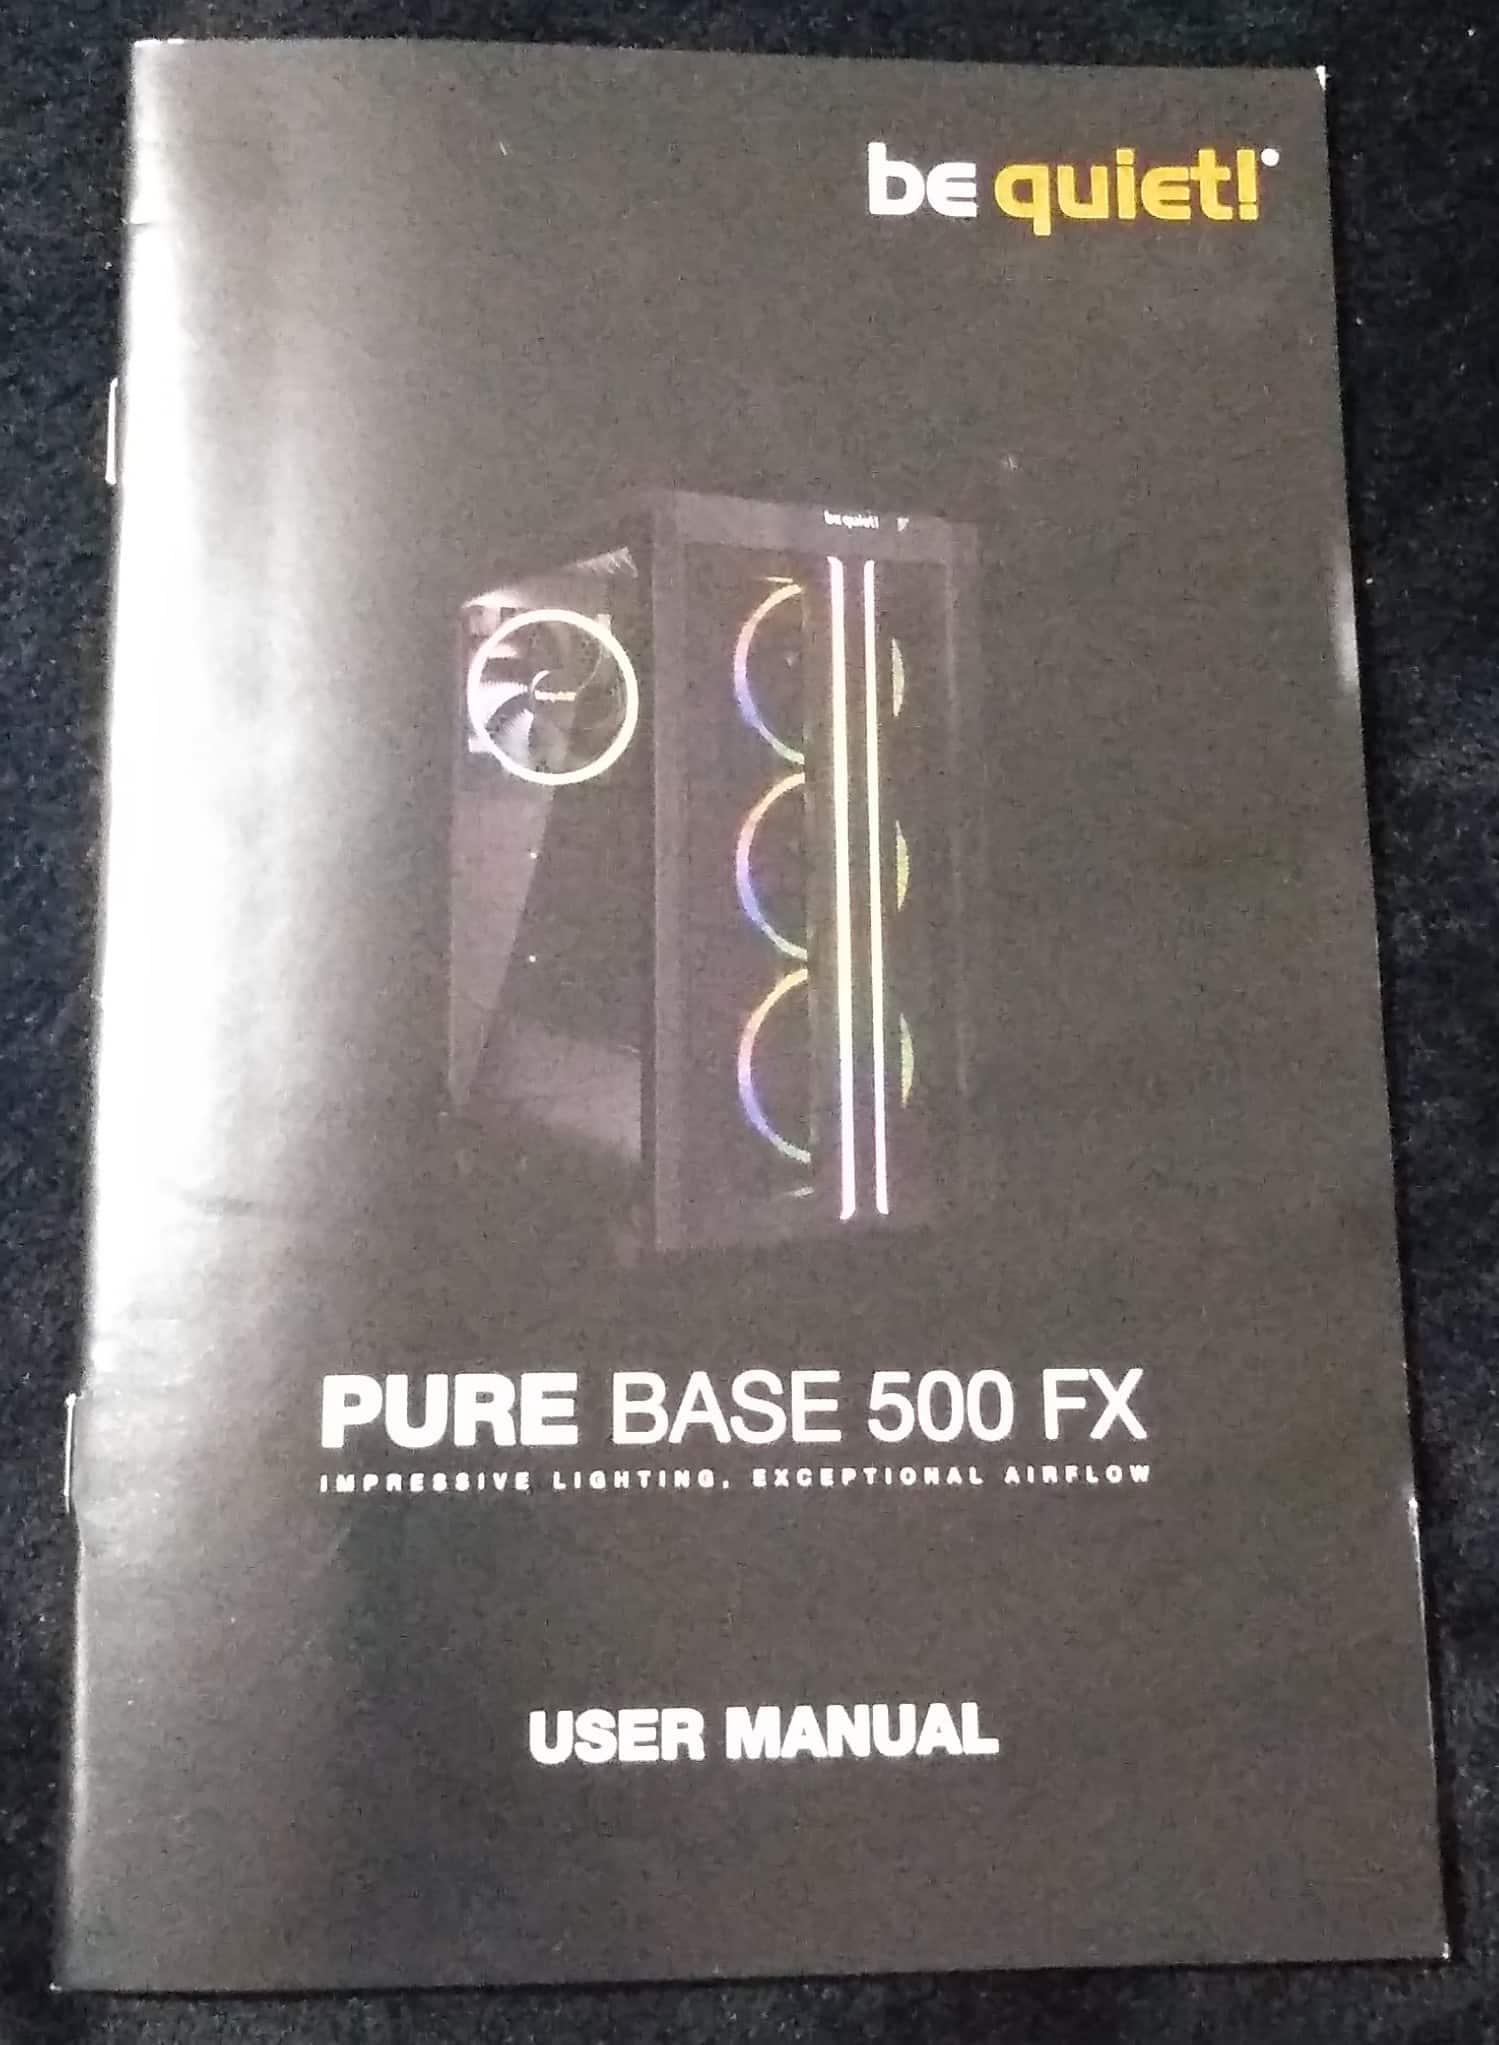 be quiet! Pure Base 500FX: An honest review 